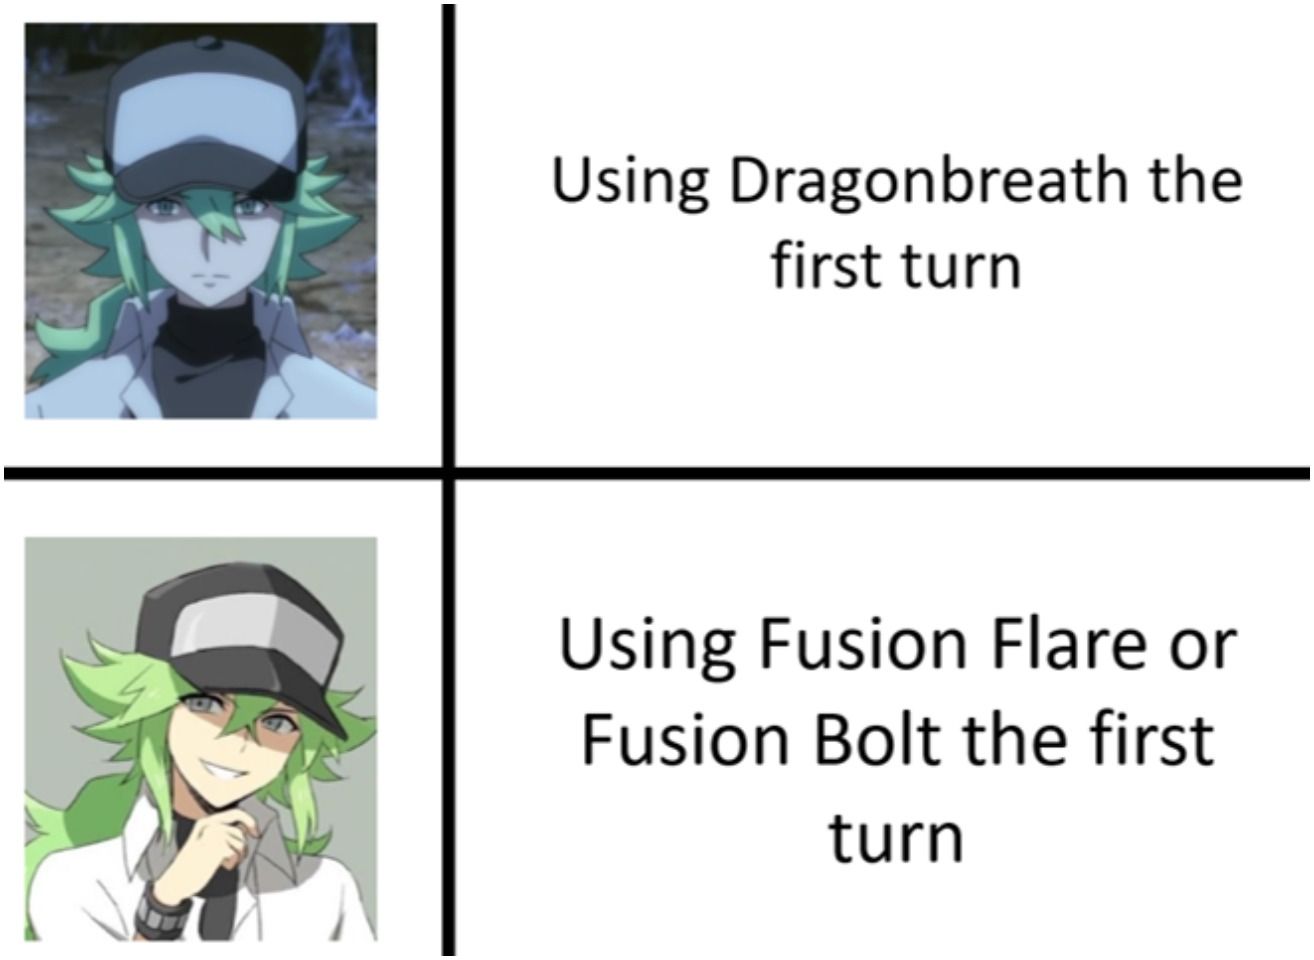 Meme of N's reaction to using dragonbreath vs. N's reaction to using fusion flare or fusion bolt